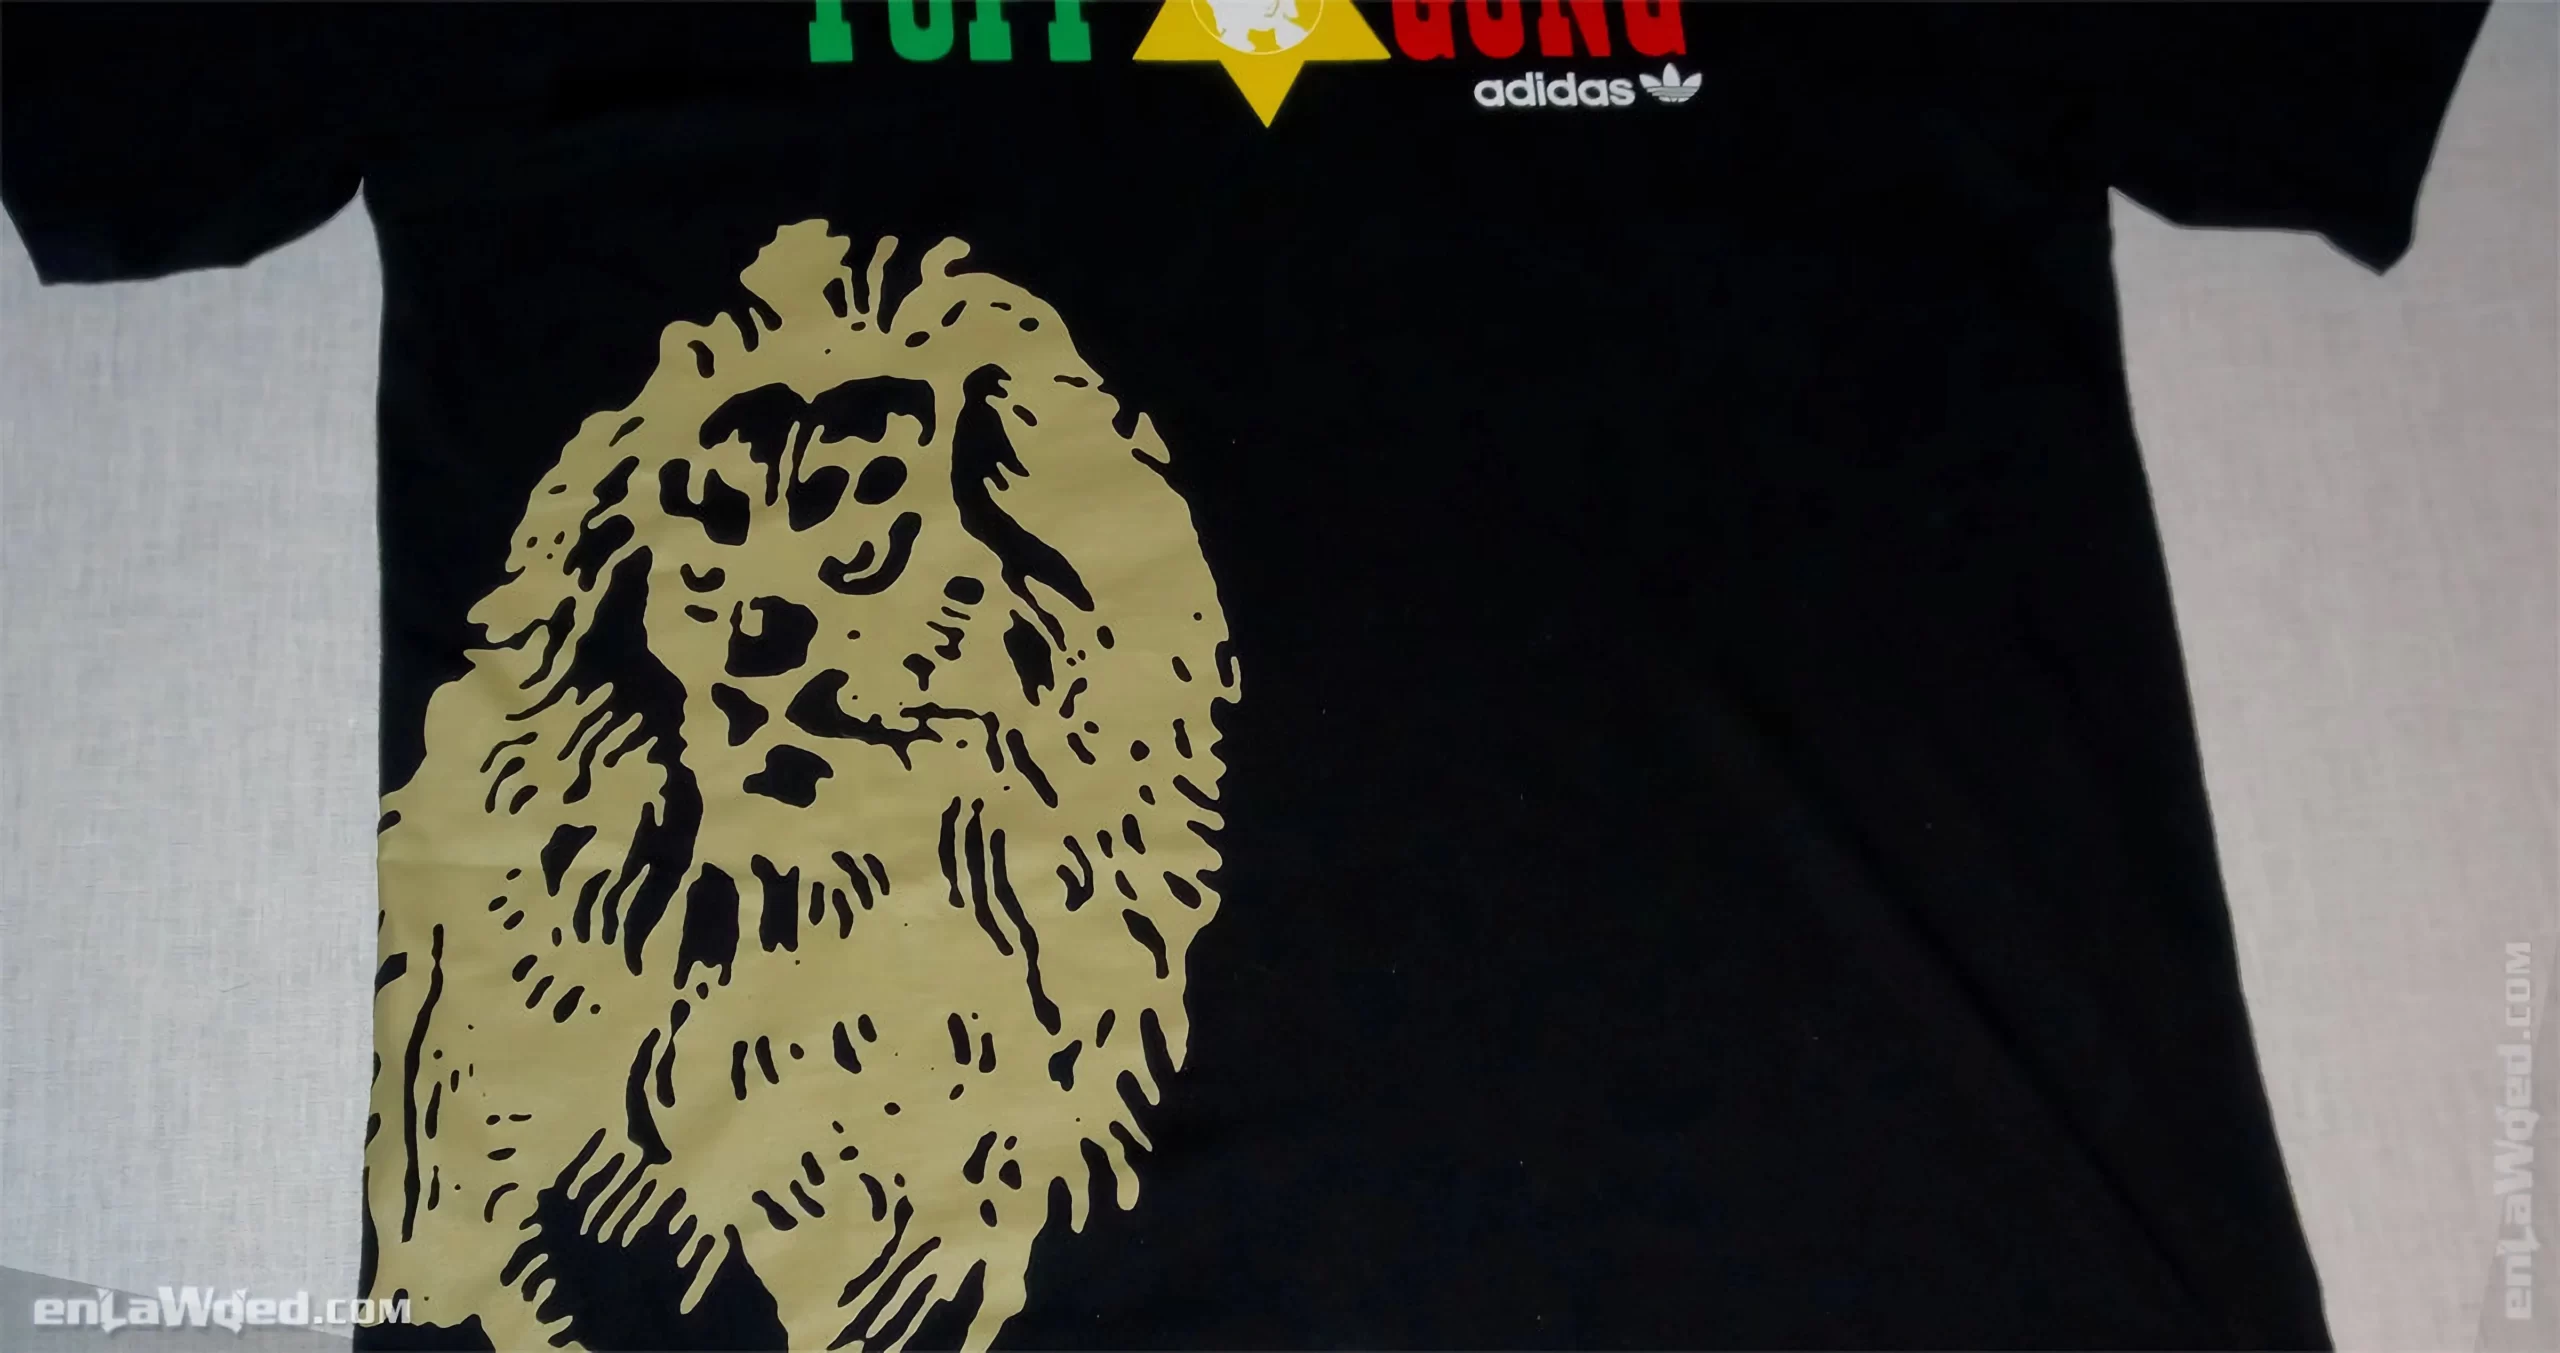 Men’s 2007 Bob Marley SMILE Tuff Gong T-Shirt by Adidas: Fine (EnLawded.com file #lmch6c59iqcxt7tij6)